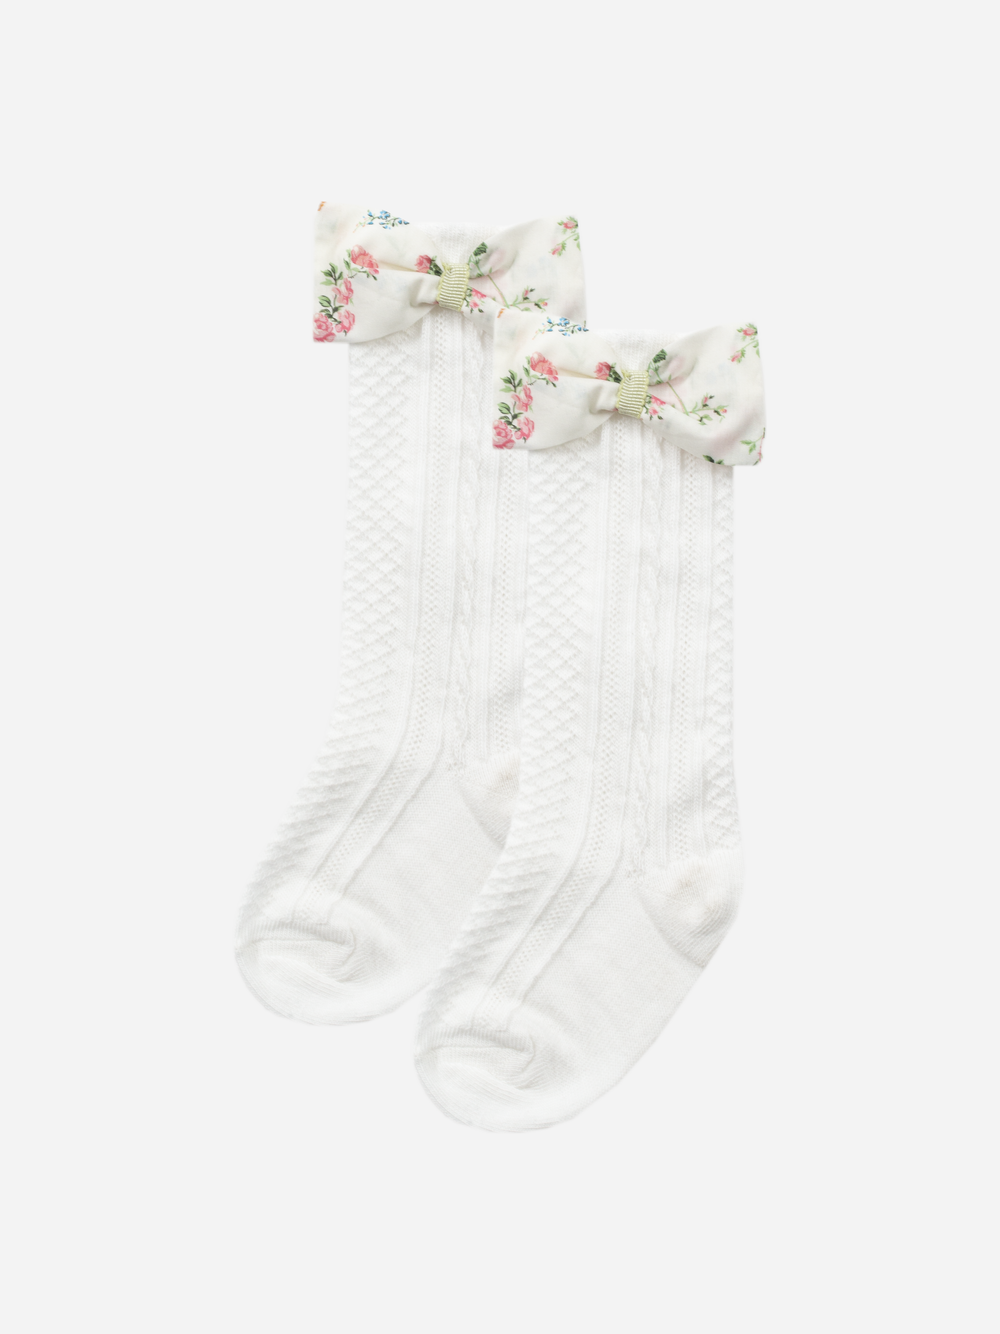 Botanical liberty print socks